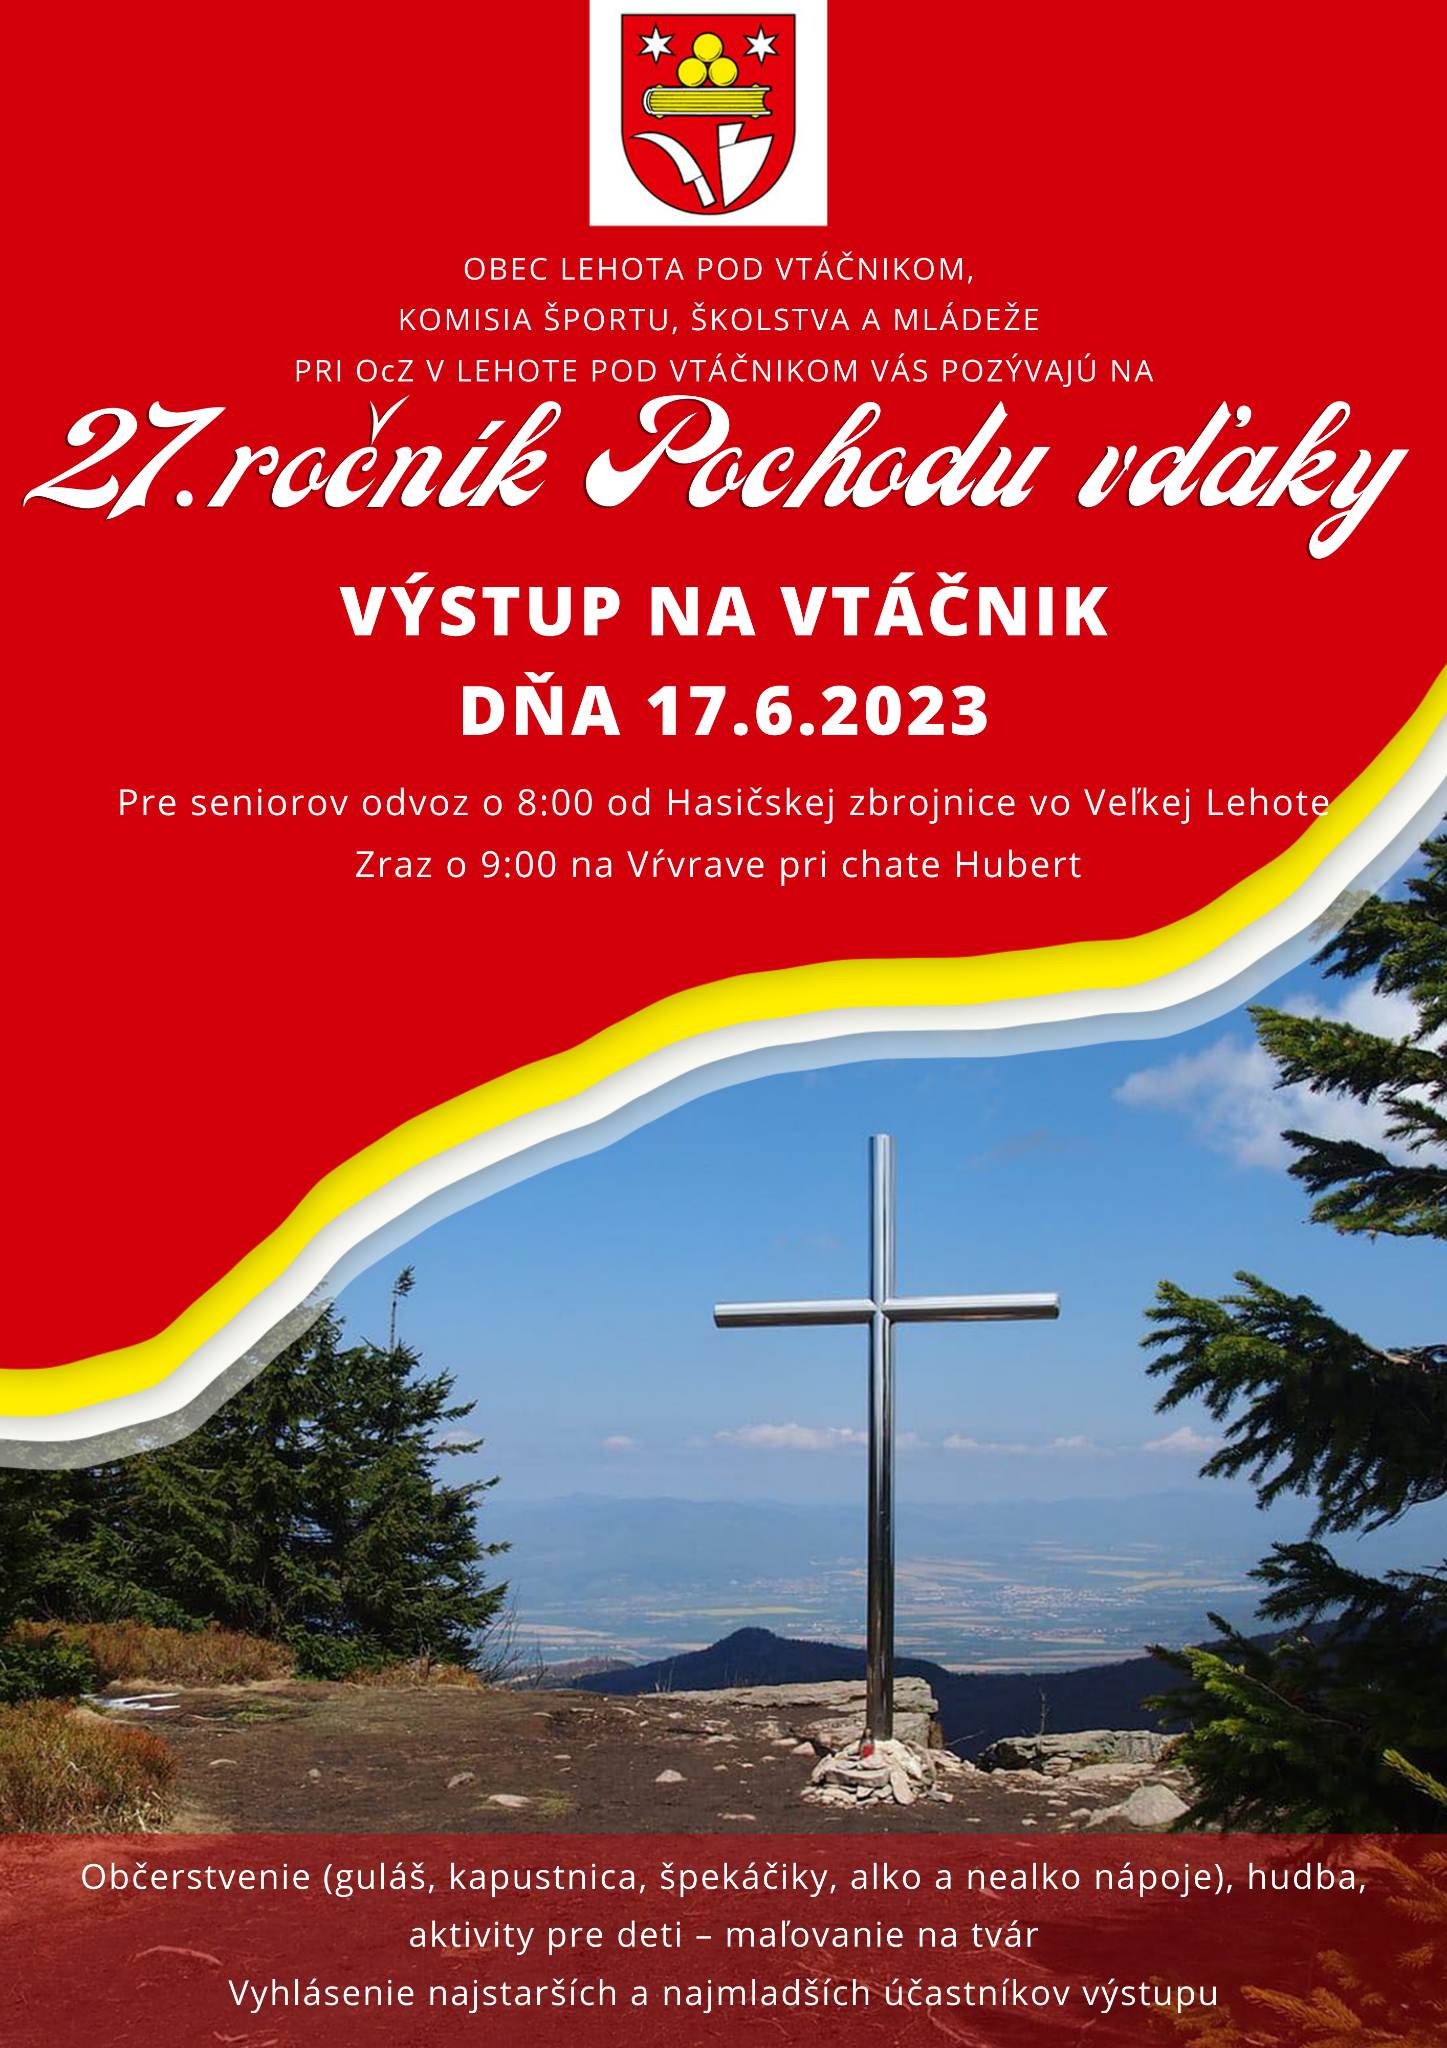 Výstup na Vtáčnik 2023 Lehota pod Vtáčnikom - 27. ročník Pochodu vďaky